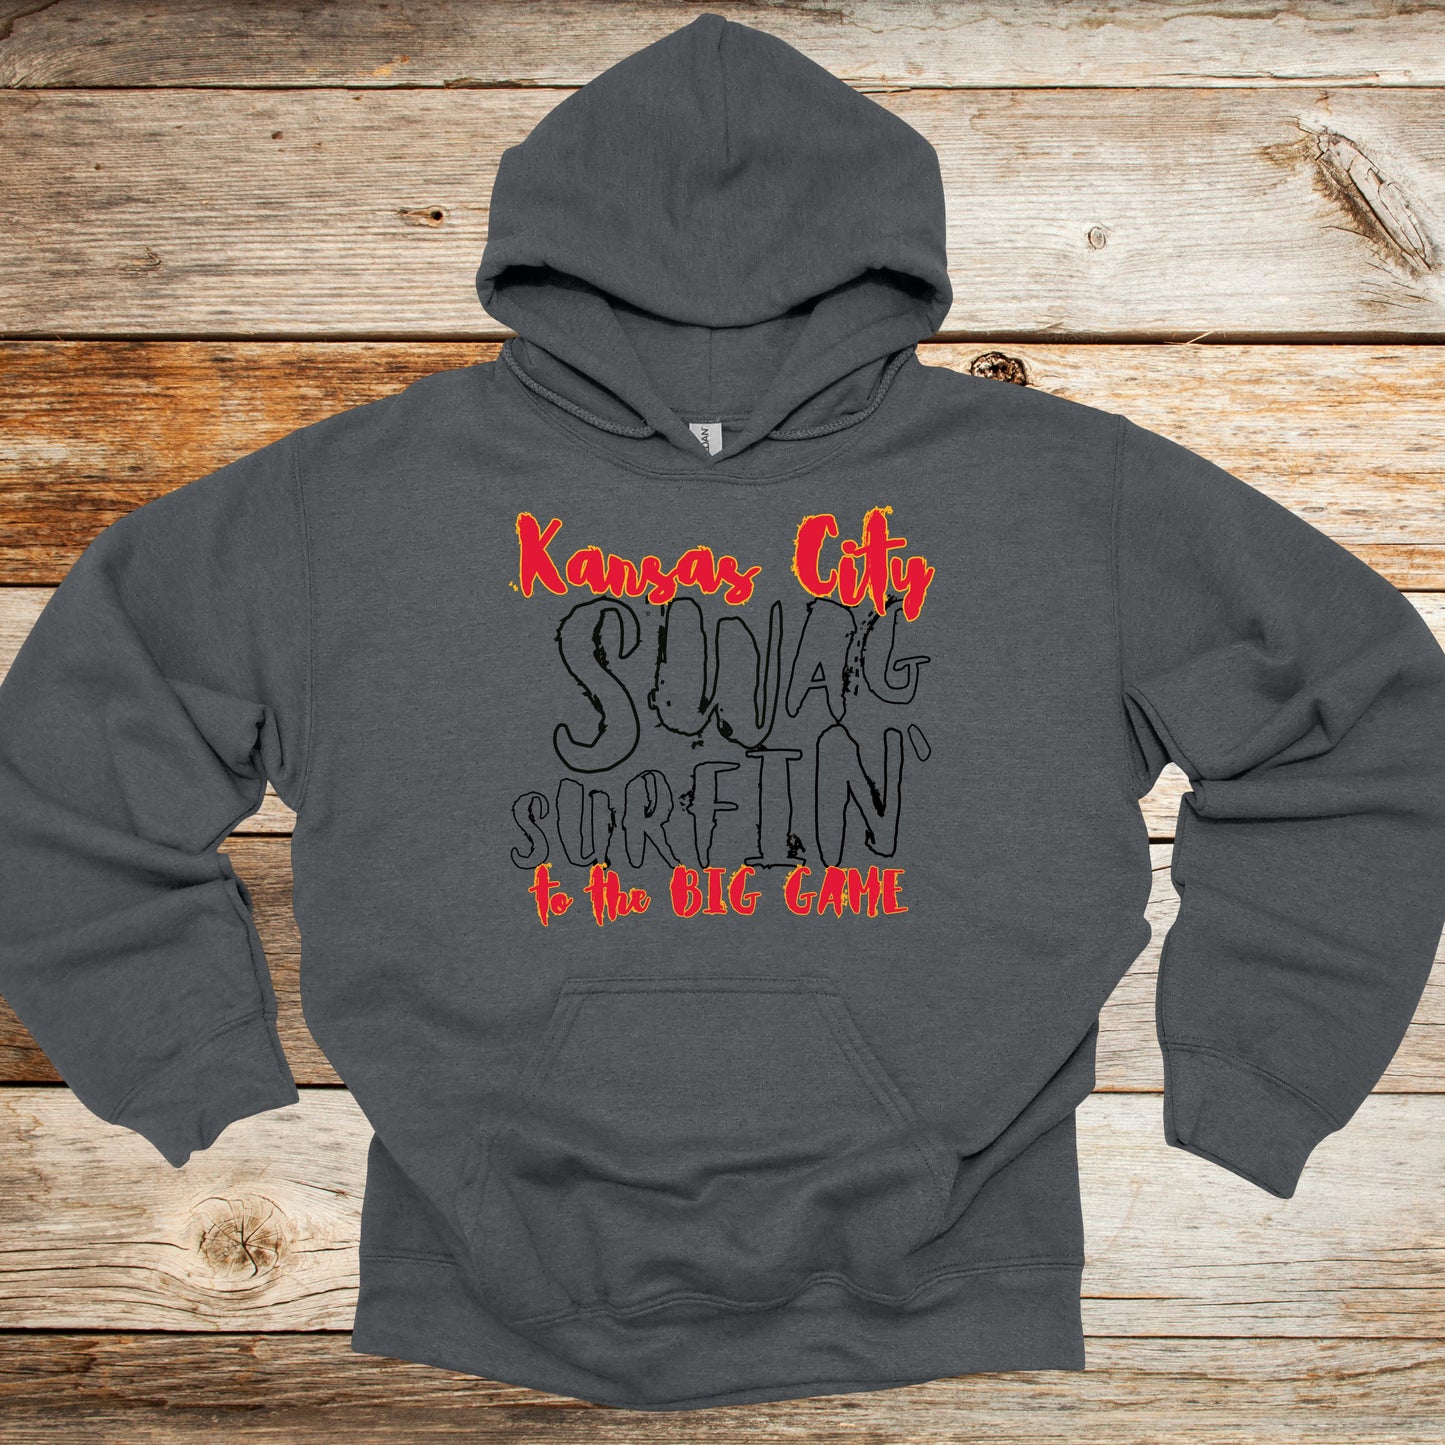 Kansas City Chiefs - Swag Surfin' - Adult Tee Shirt, Crewneck Sweatshirts and Hoodie